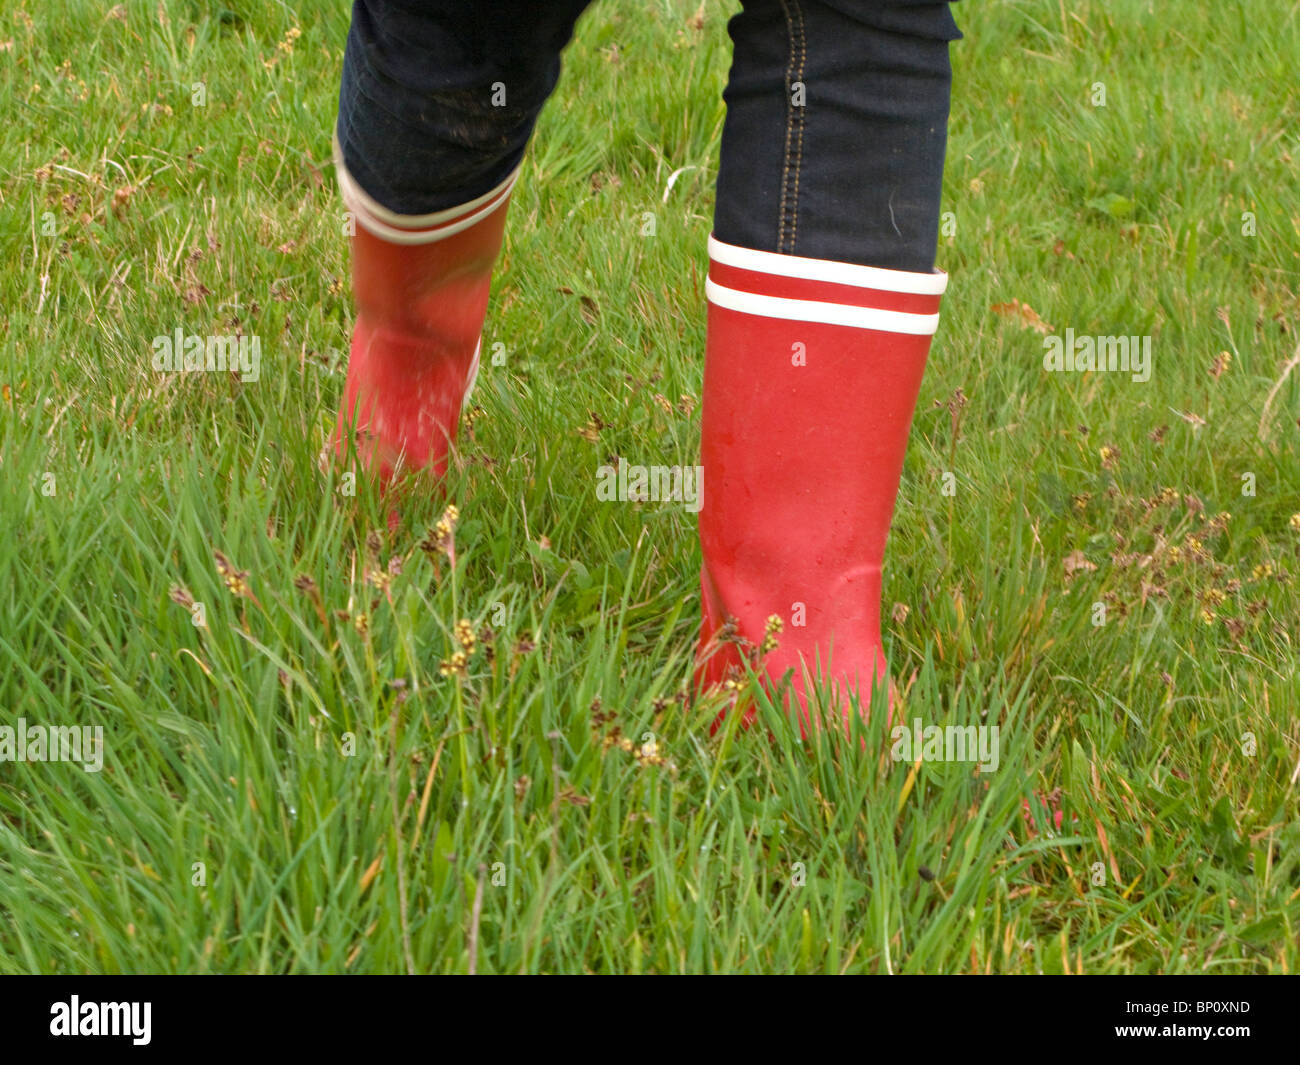 Woman wearing wellington boots, on grass Stock Photo - Alamy